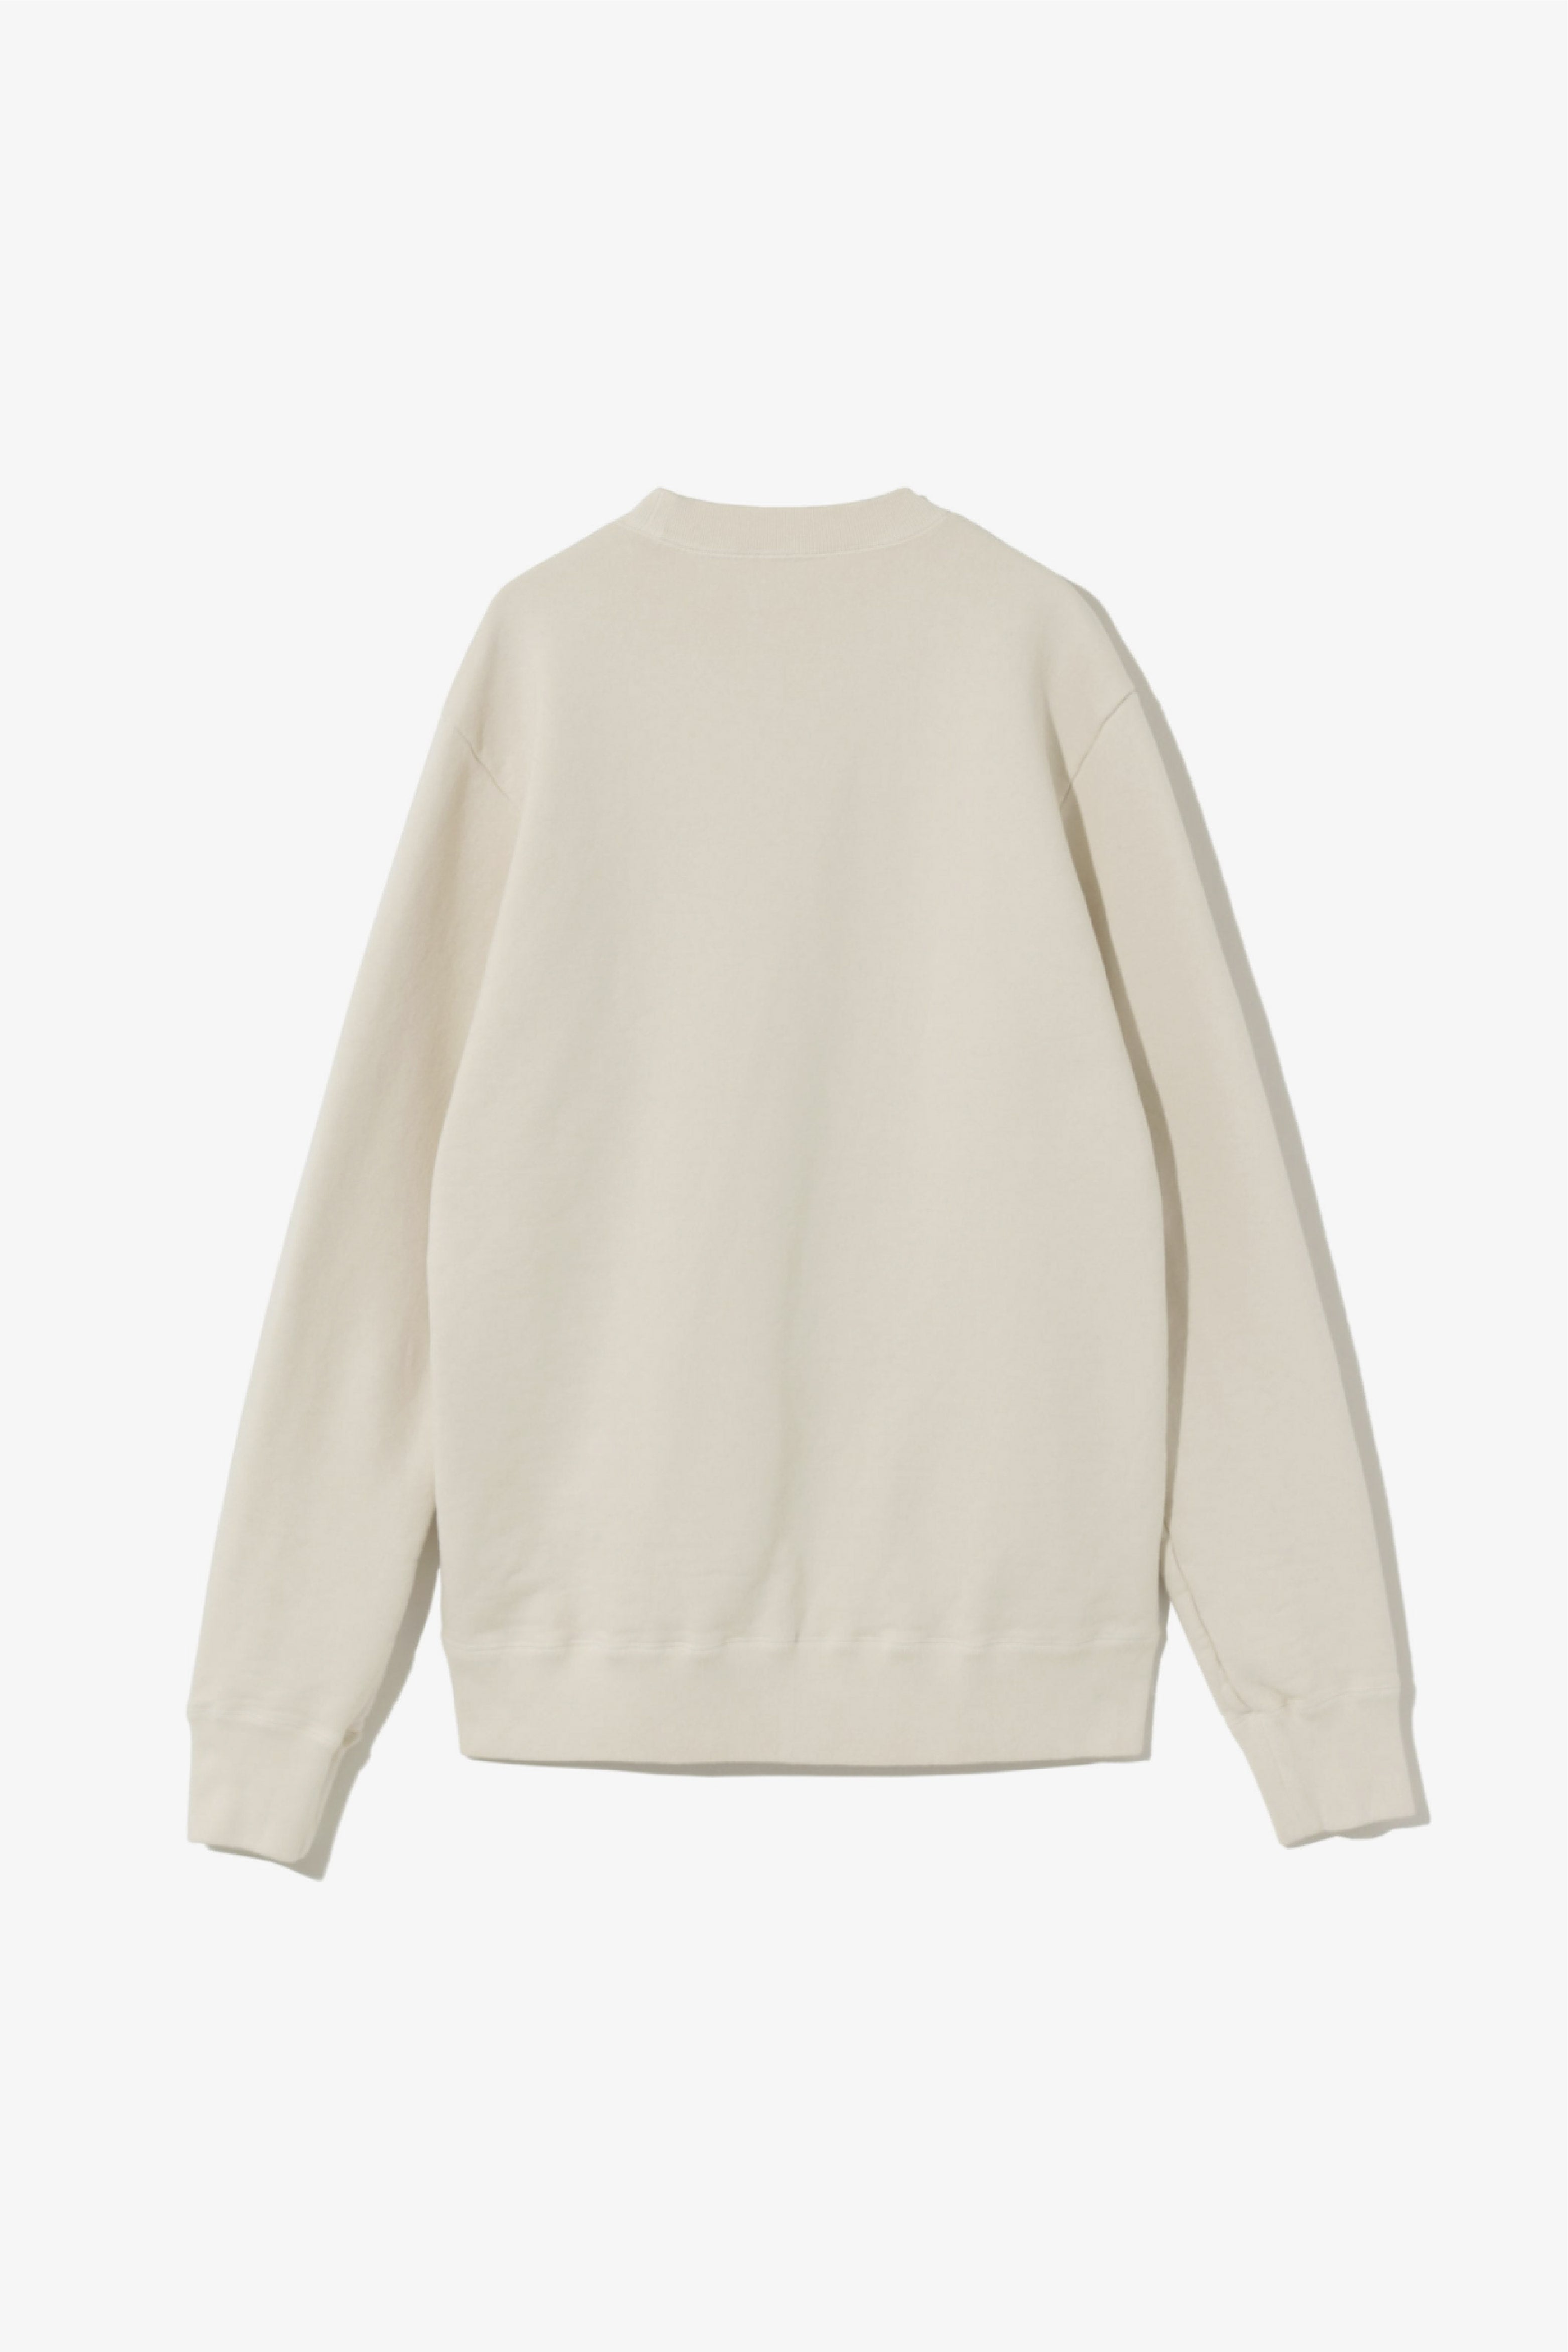 Selectshop FRAME - UNDERCOVER Crewneck Sweatshirt Sweats-knits Dubai